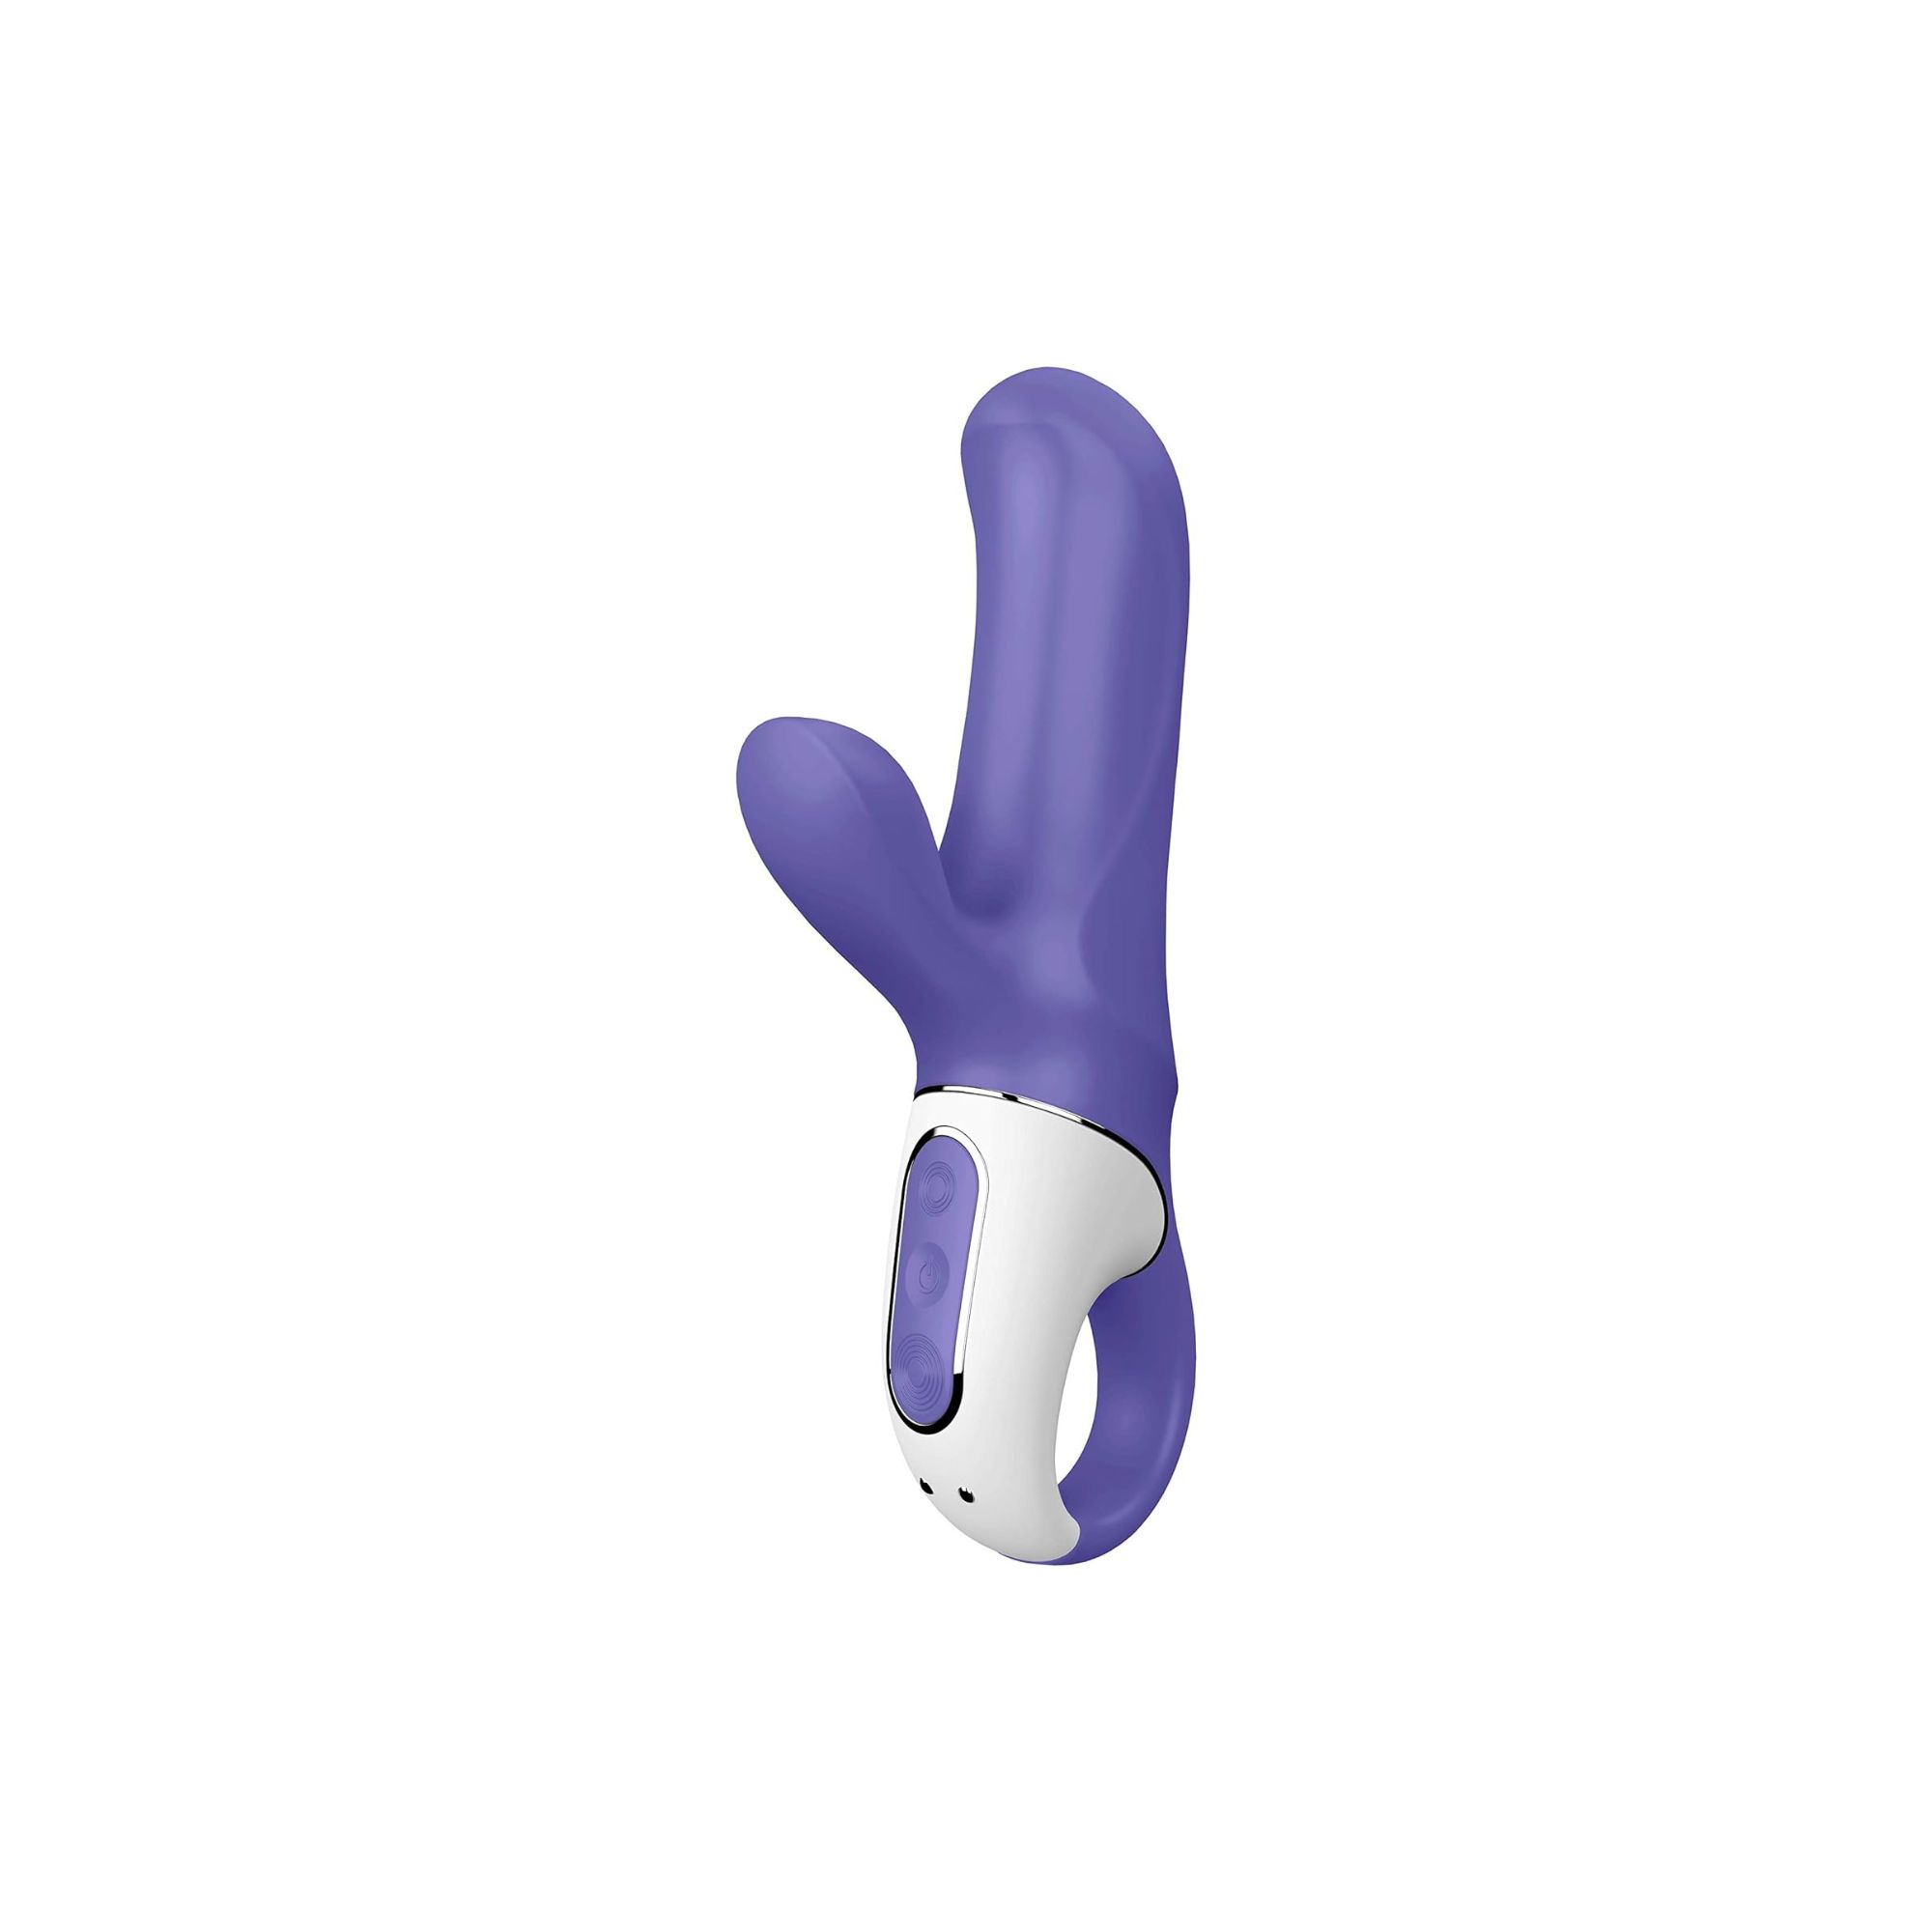 Satisfyer Magic Bunny is the best rabbit vibrator that